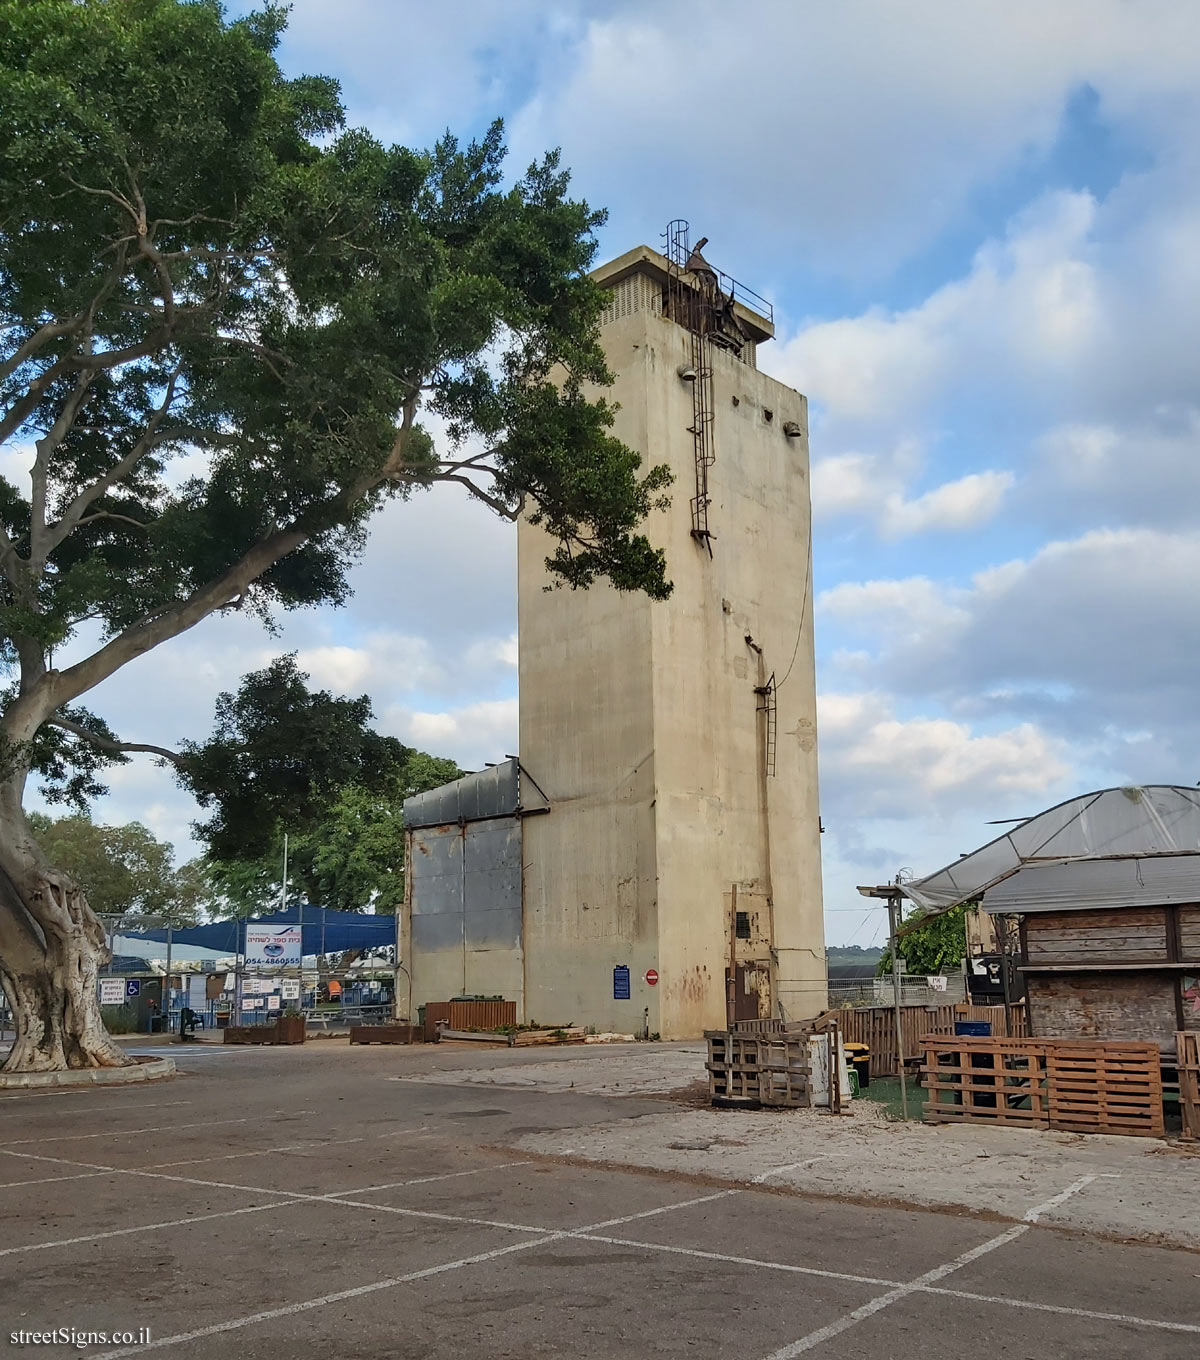 Kfar Haim - Heritage Sites in Israel - The barn and the Feed Institute